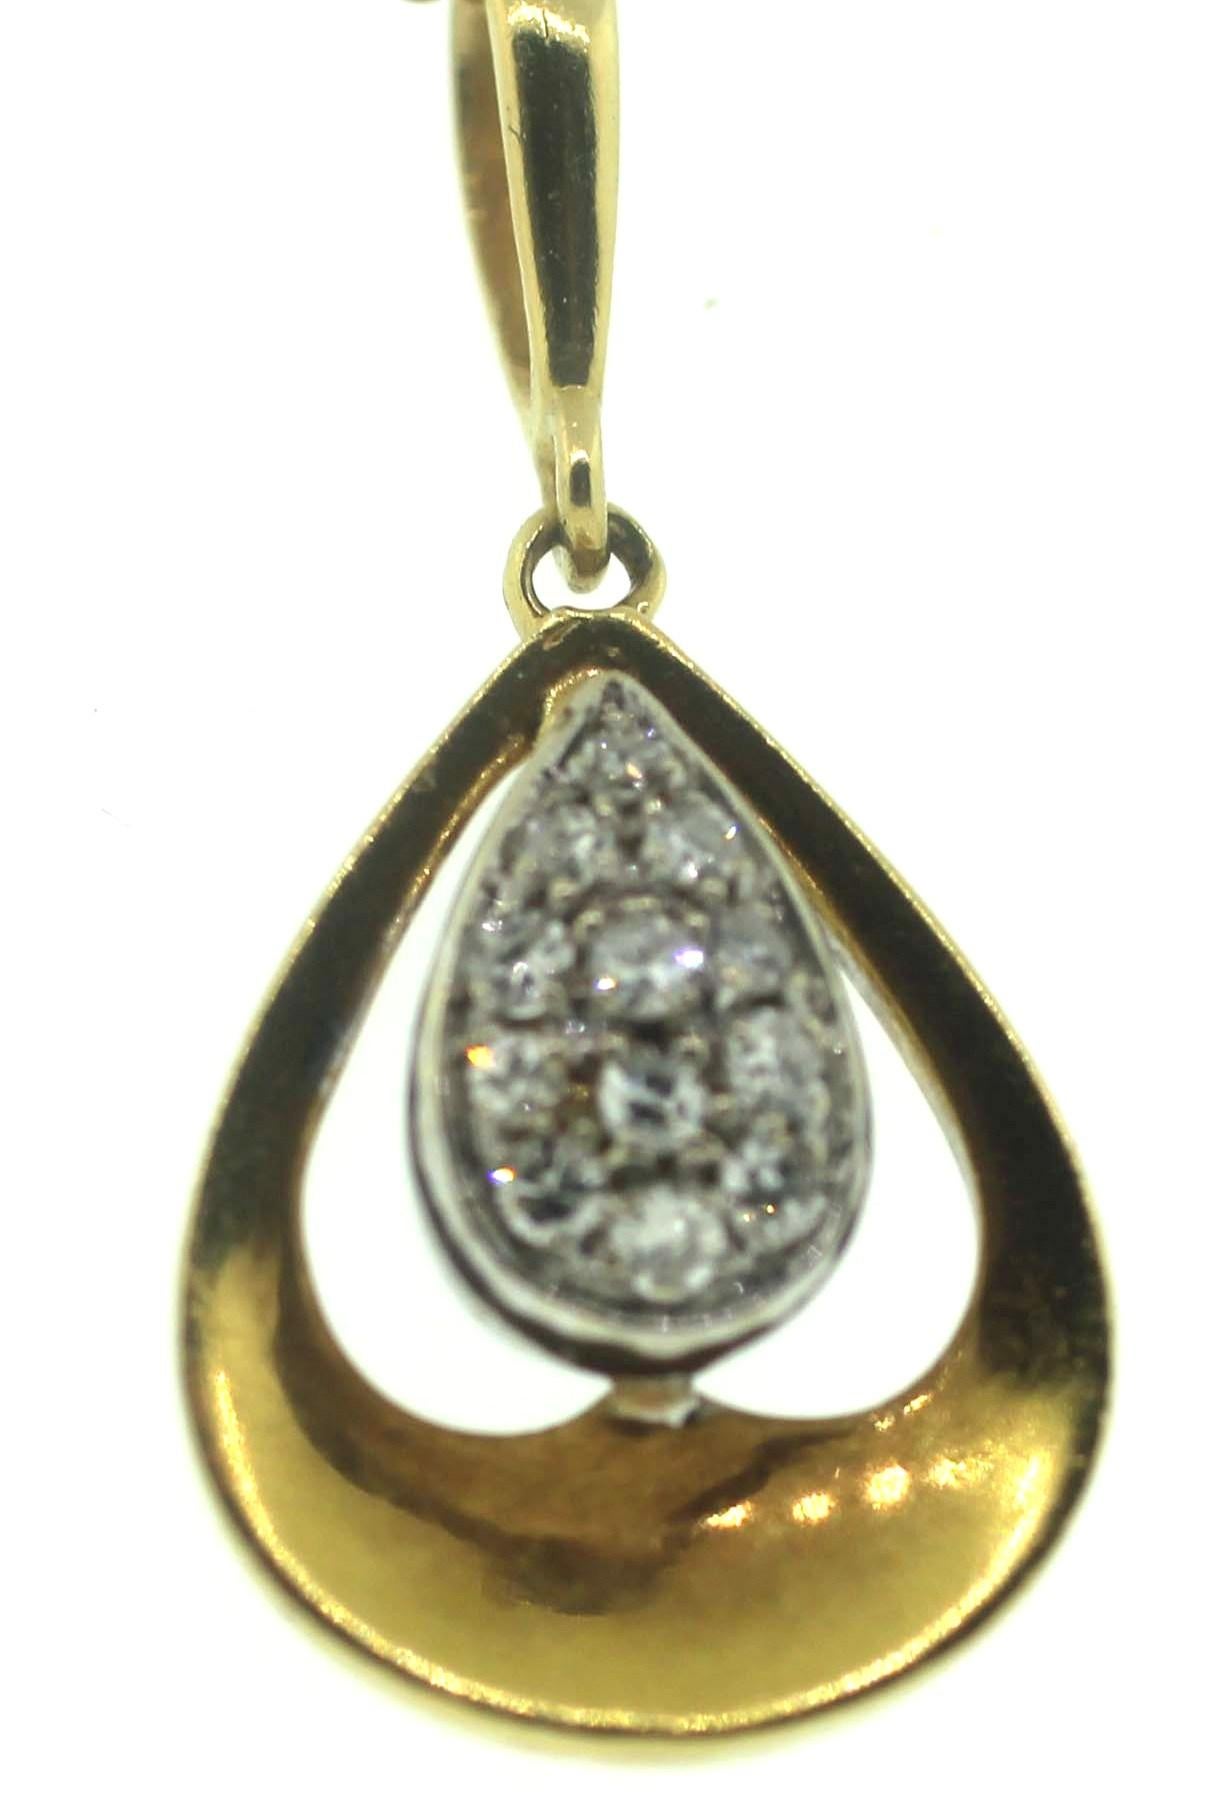 Jewel Of Ocean Diamond Pendent
0.4 Carts
12 Round Brilliant cut. 
18K Yellow Gold
Measurements: Band Width 4.1mm, Ornament Width 18.1mm, Ornament